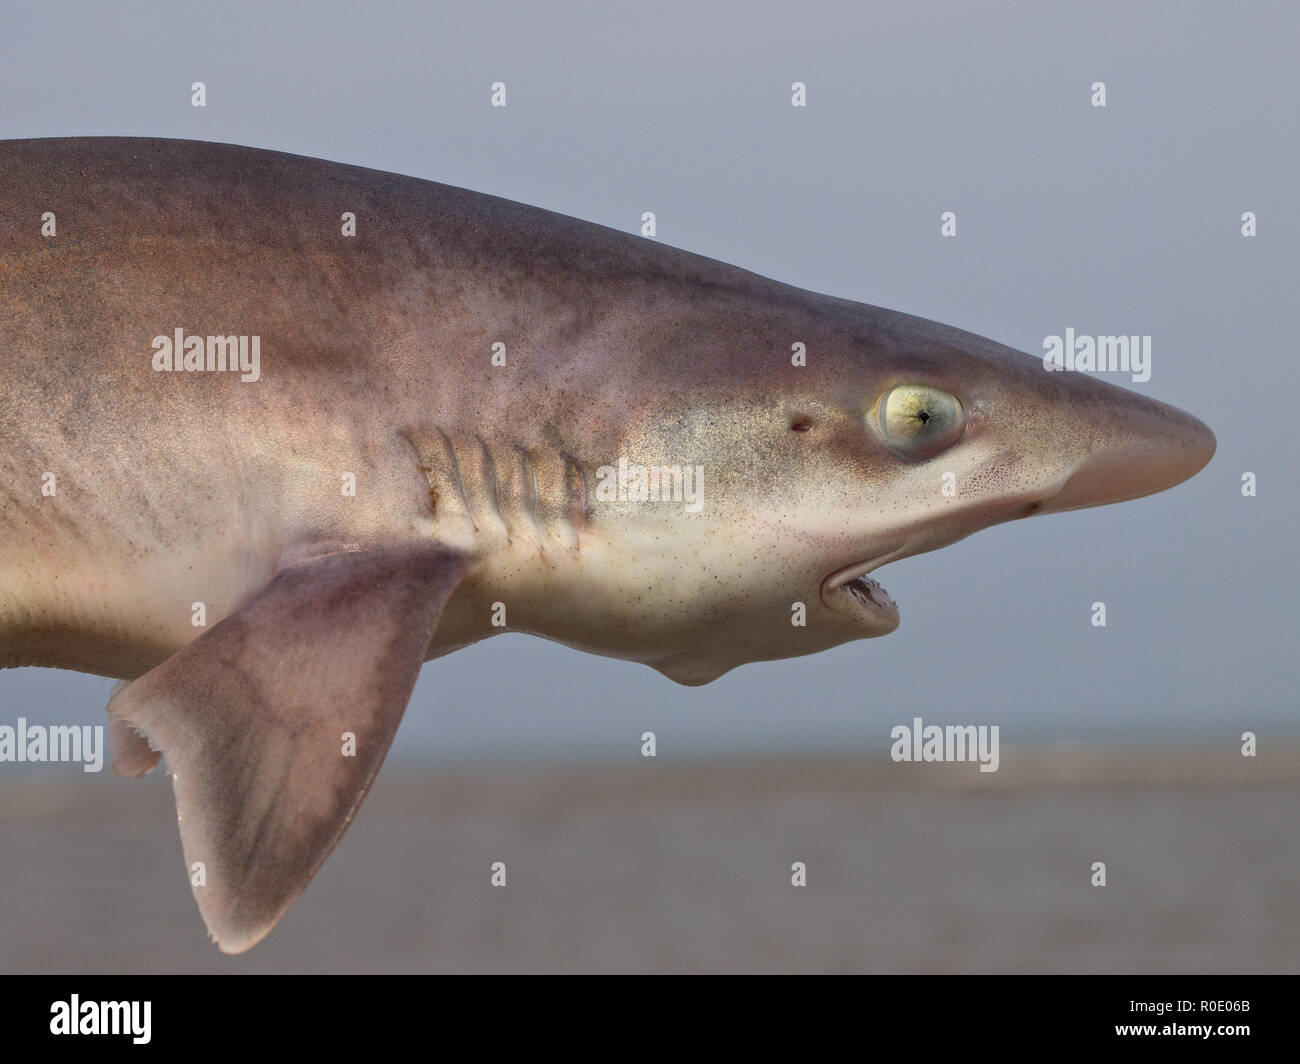 common smooth-hound (mustelus mustelus) shark sideview Stock Photo